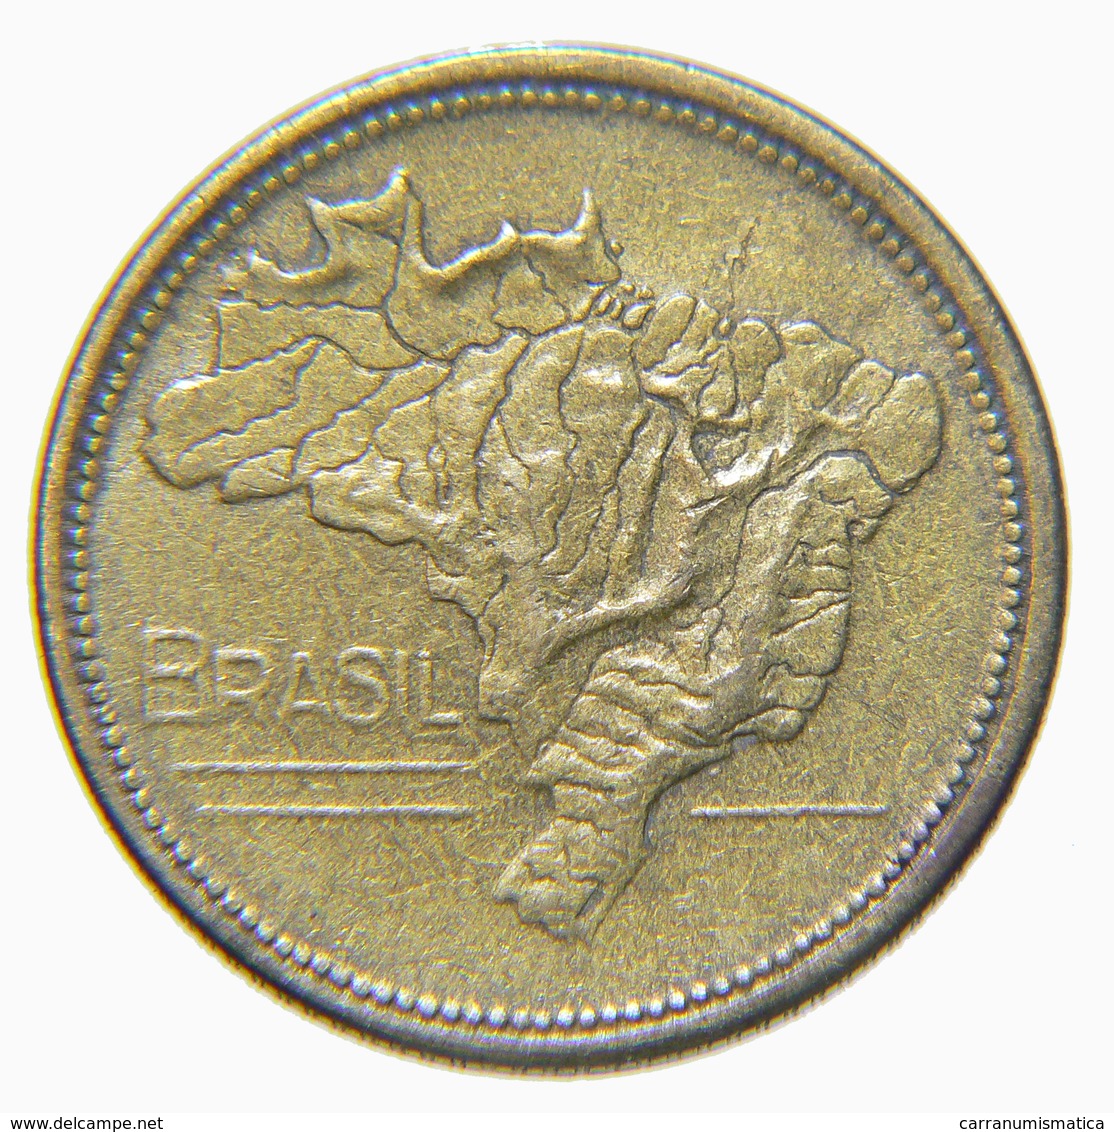 [NC] BRASILE - 1 CRUZEIRO - 1945 (nc3996) - Brasile